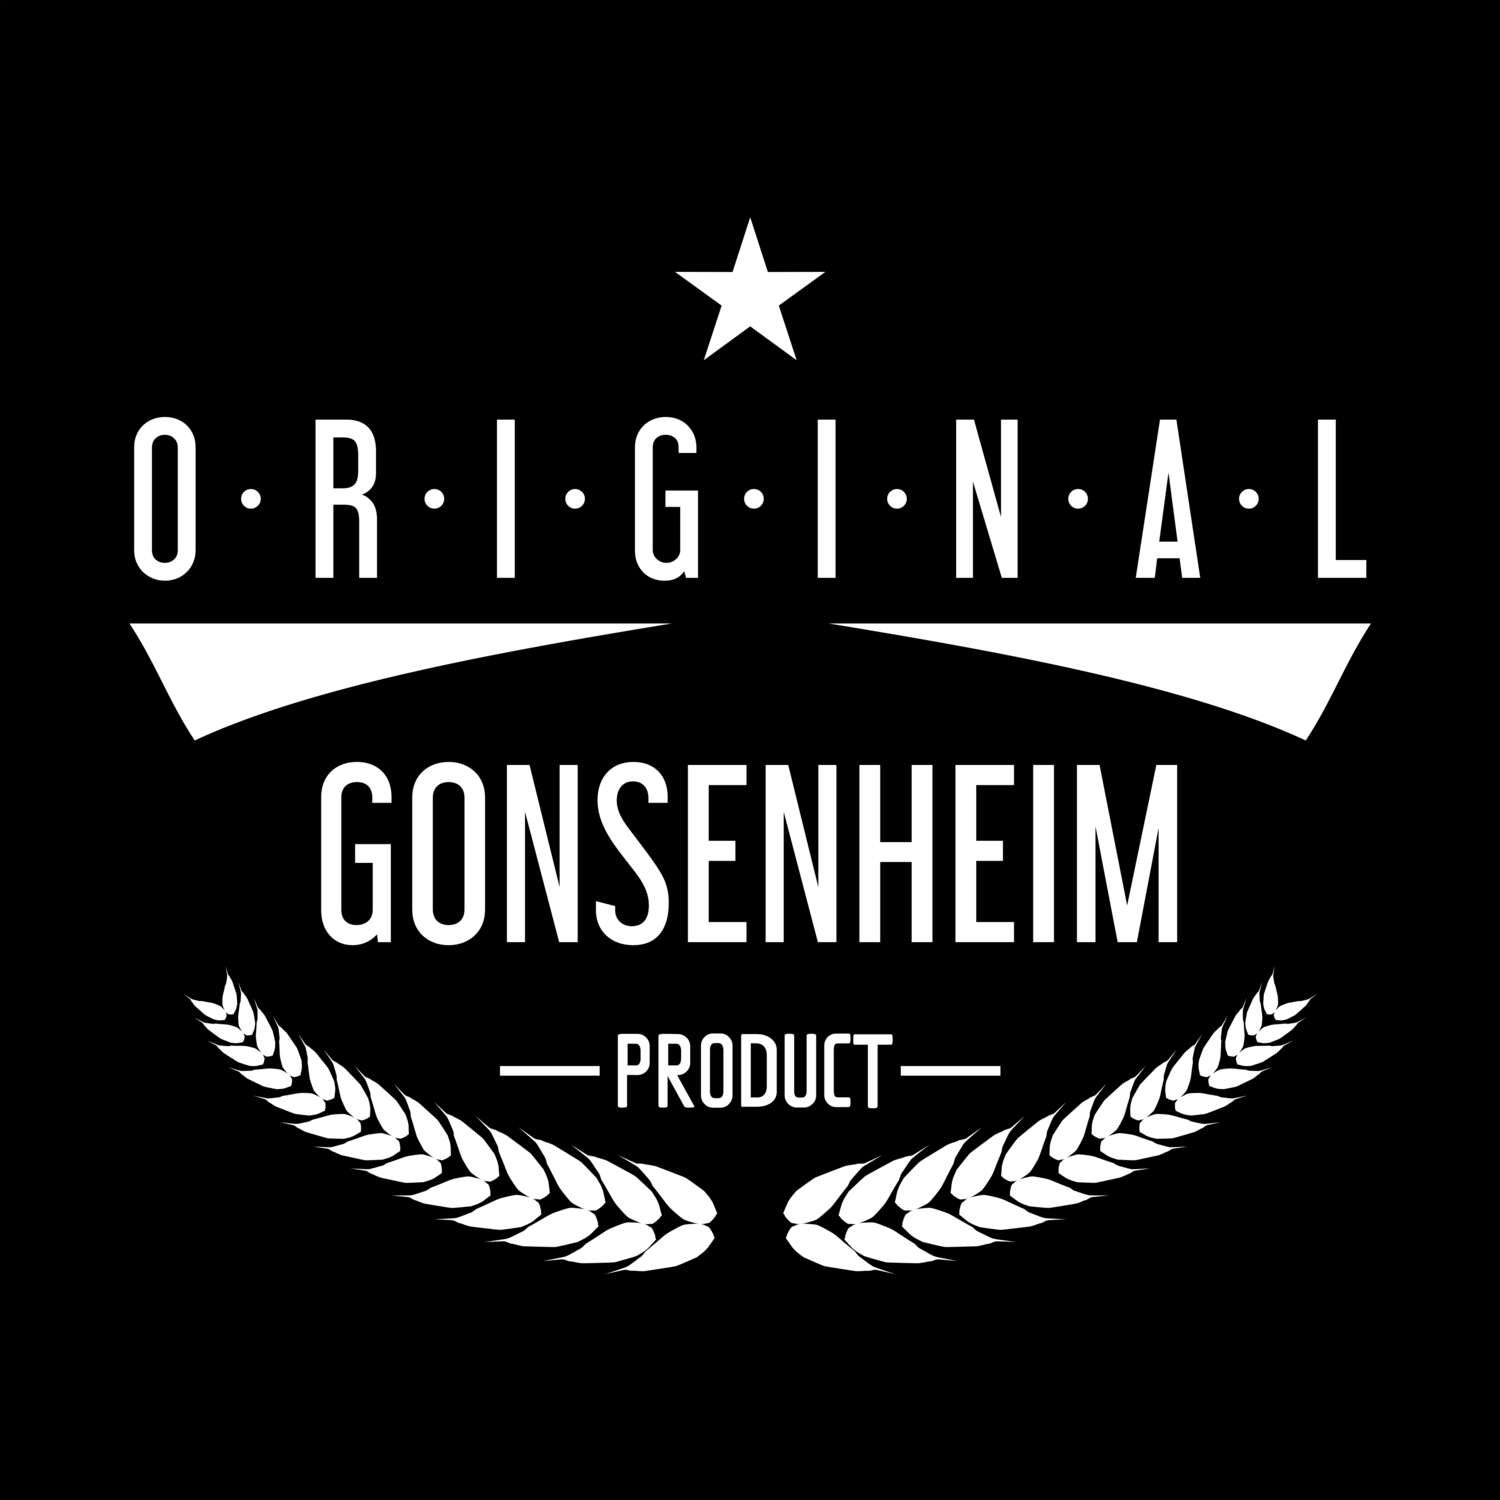 Gonsenheim T-Shirt »Original Product«